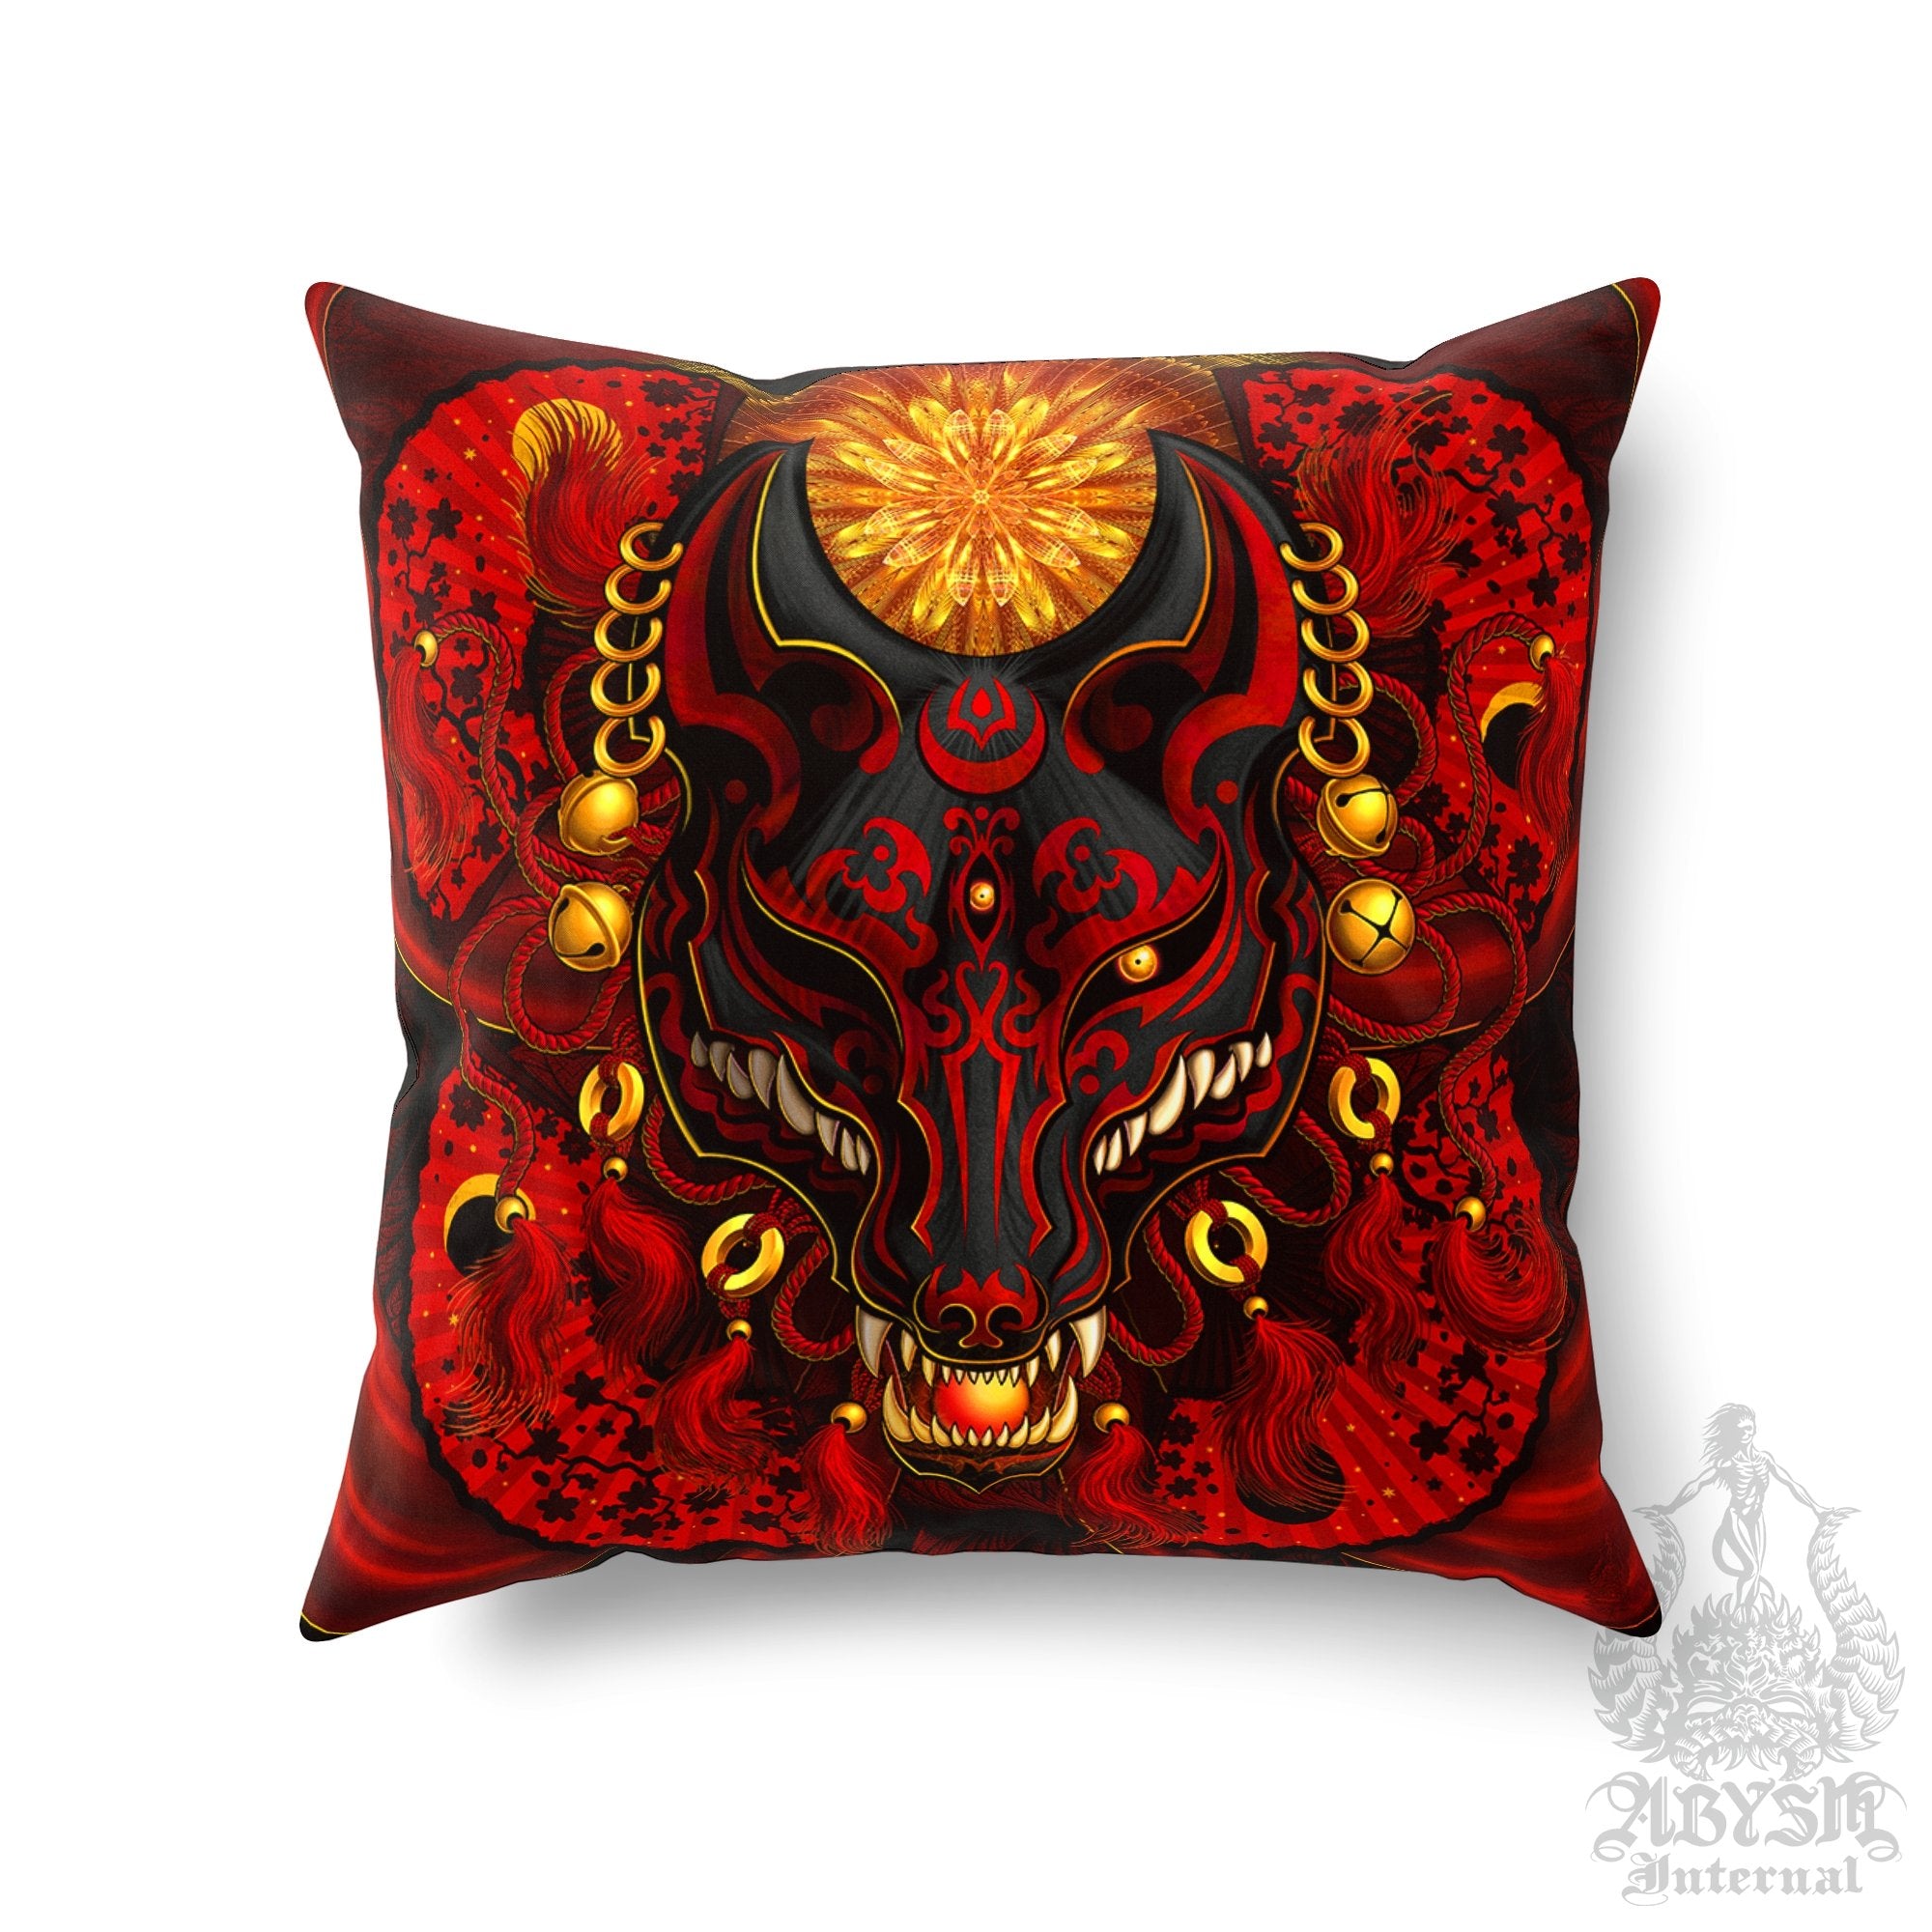 Kitsune Throw Pillow, Decorative Accent Cushion, Japanese Fox Mask, Okami, Anime and Gamer Room Decor, Alternative Home - Red & Black - Abysm Internal